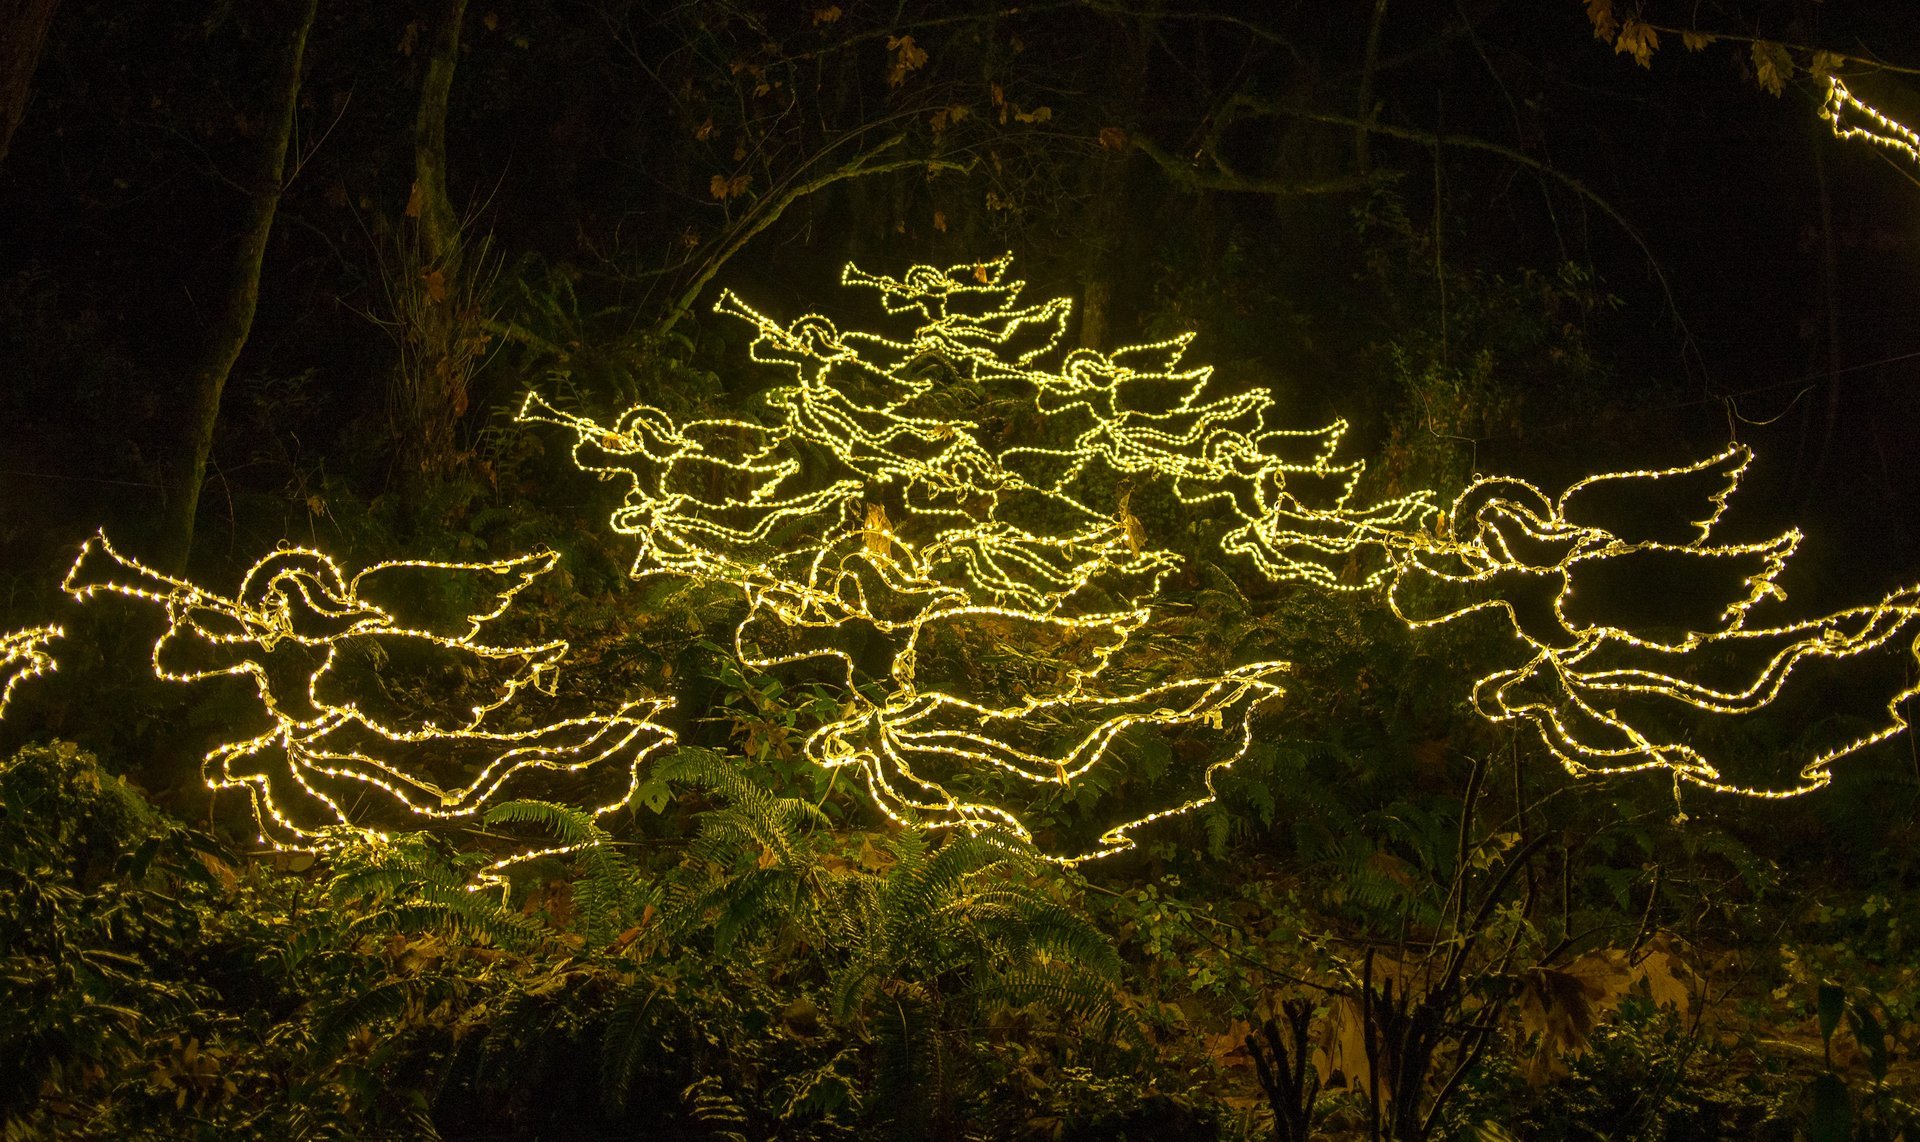 Luzes de Natal de Oregon